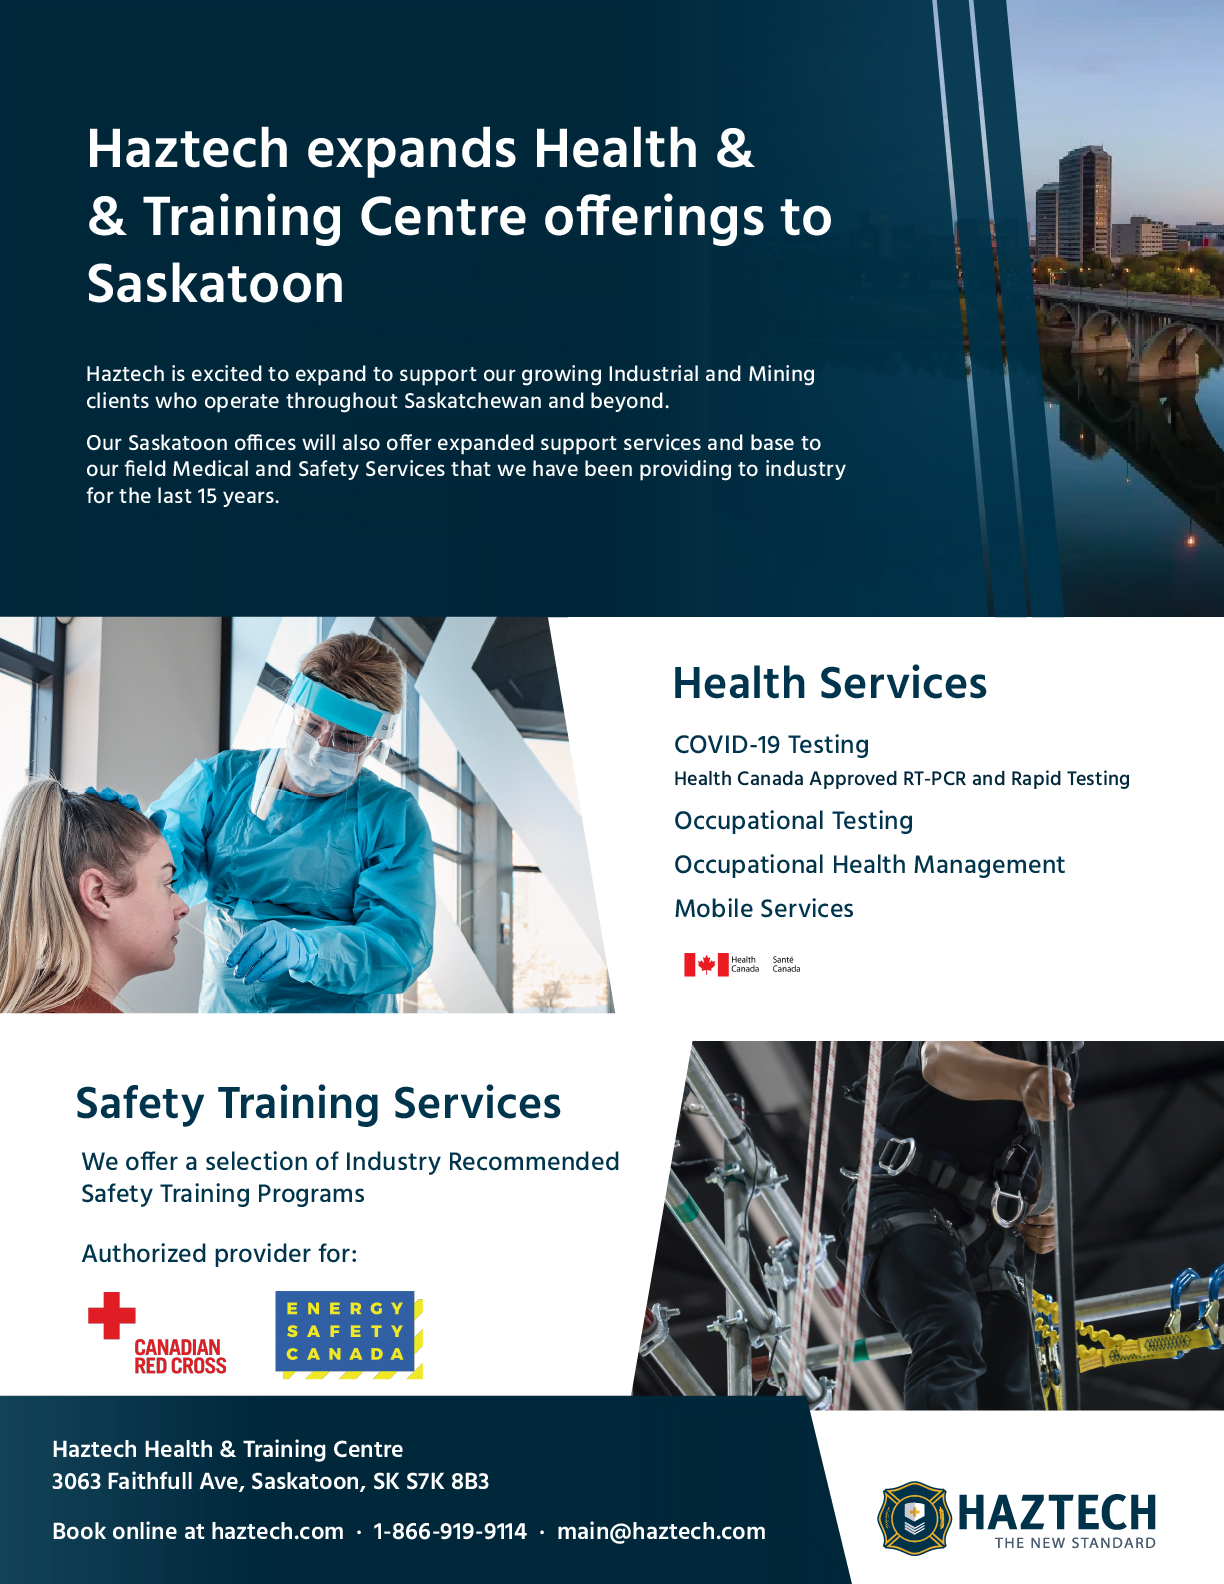 Haztech expands Health Centre & Training Centre to Saskatoon